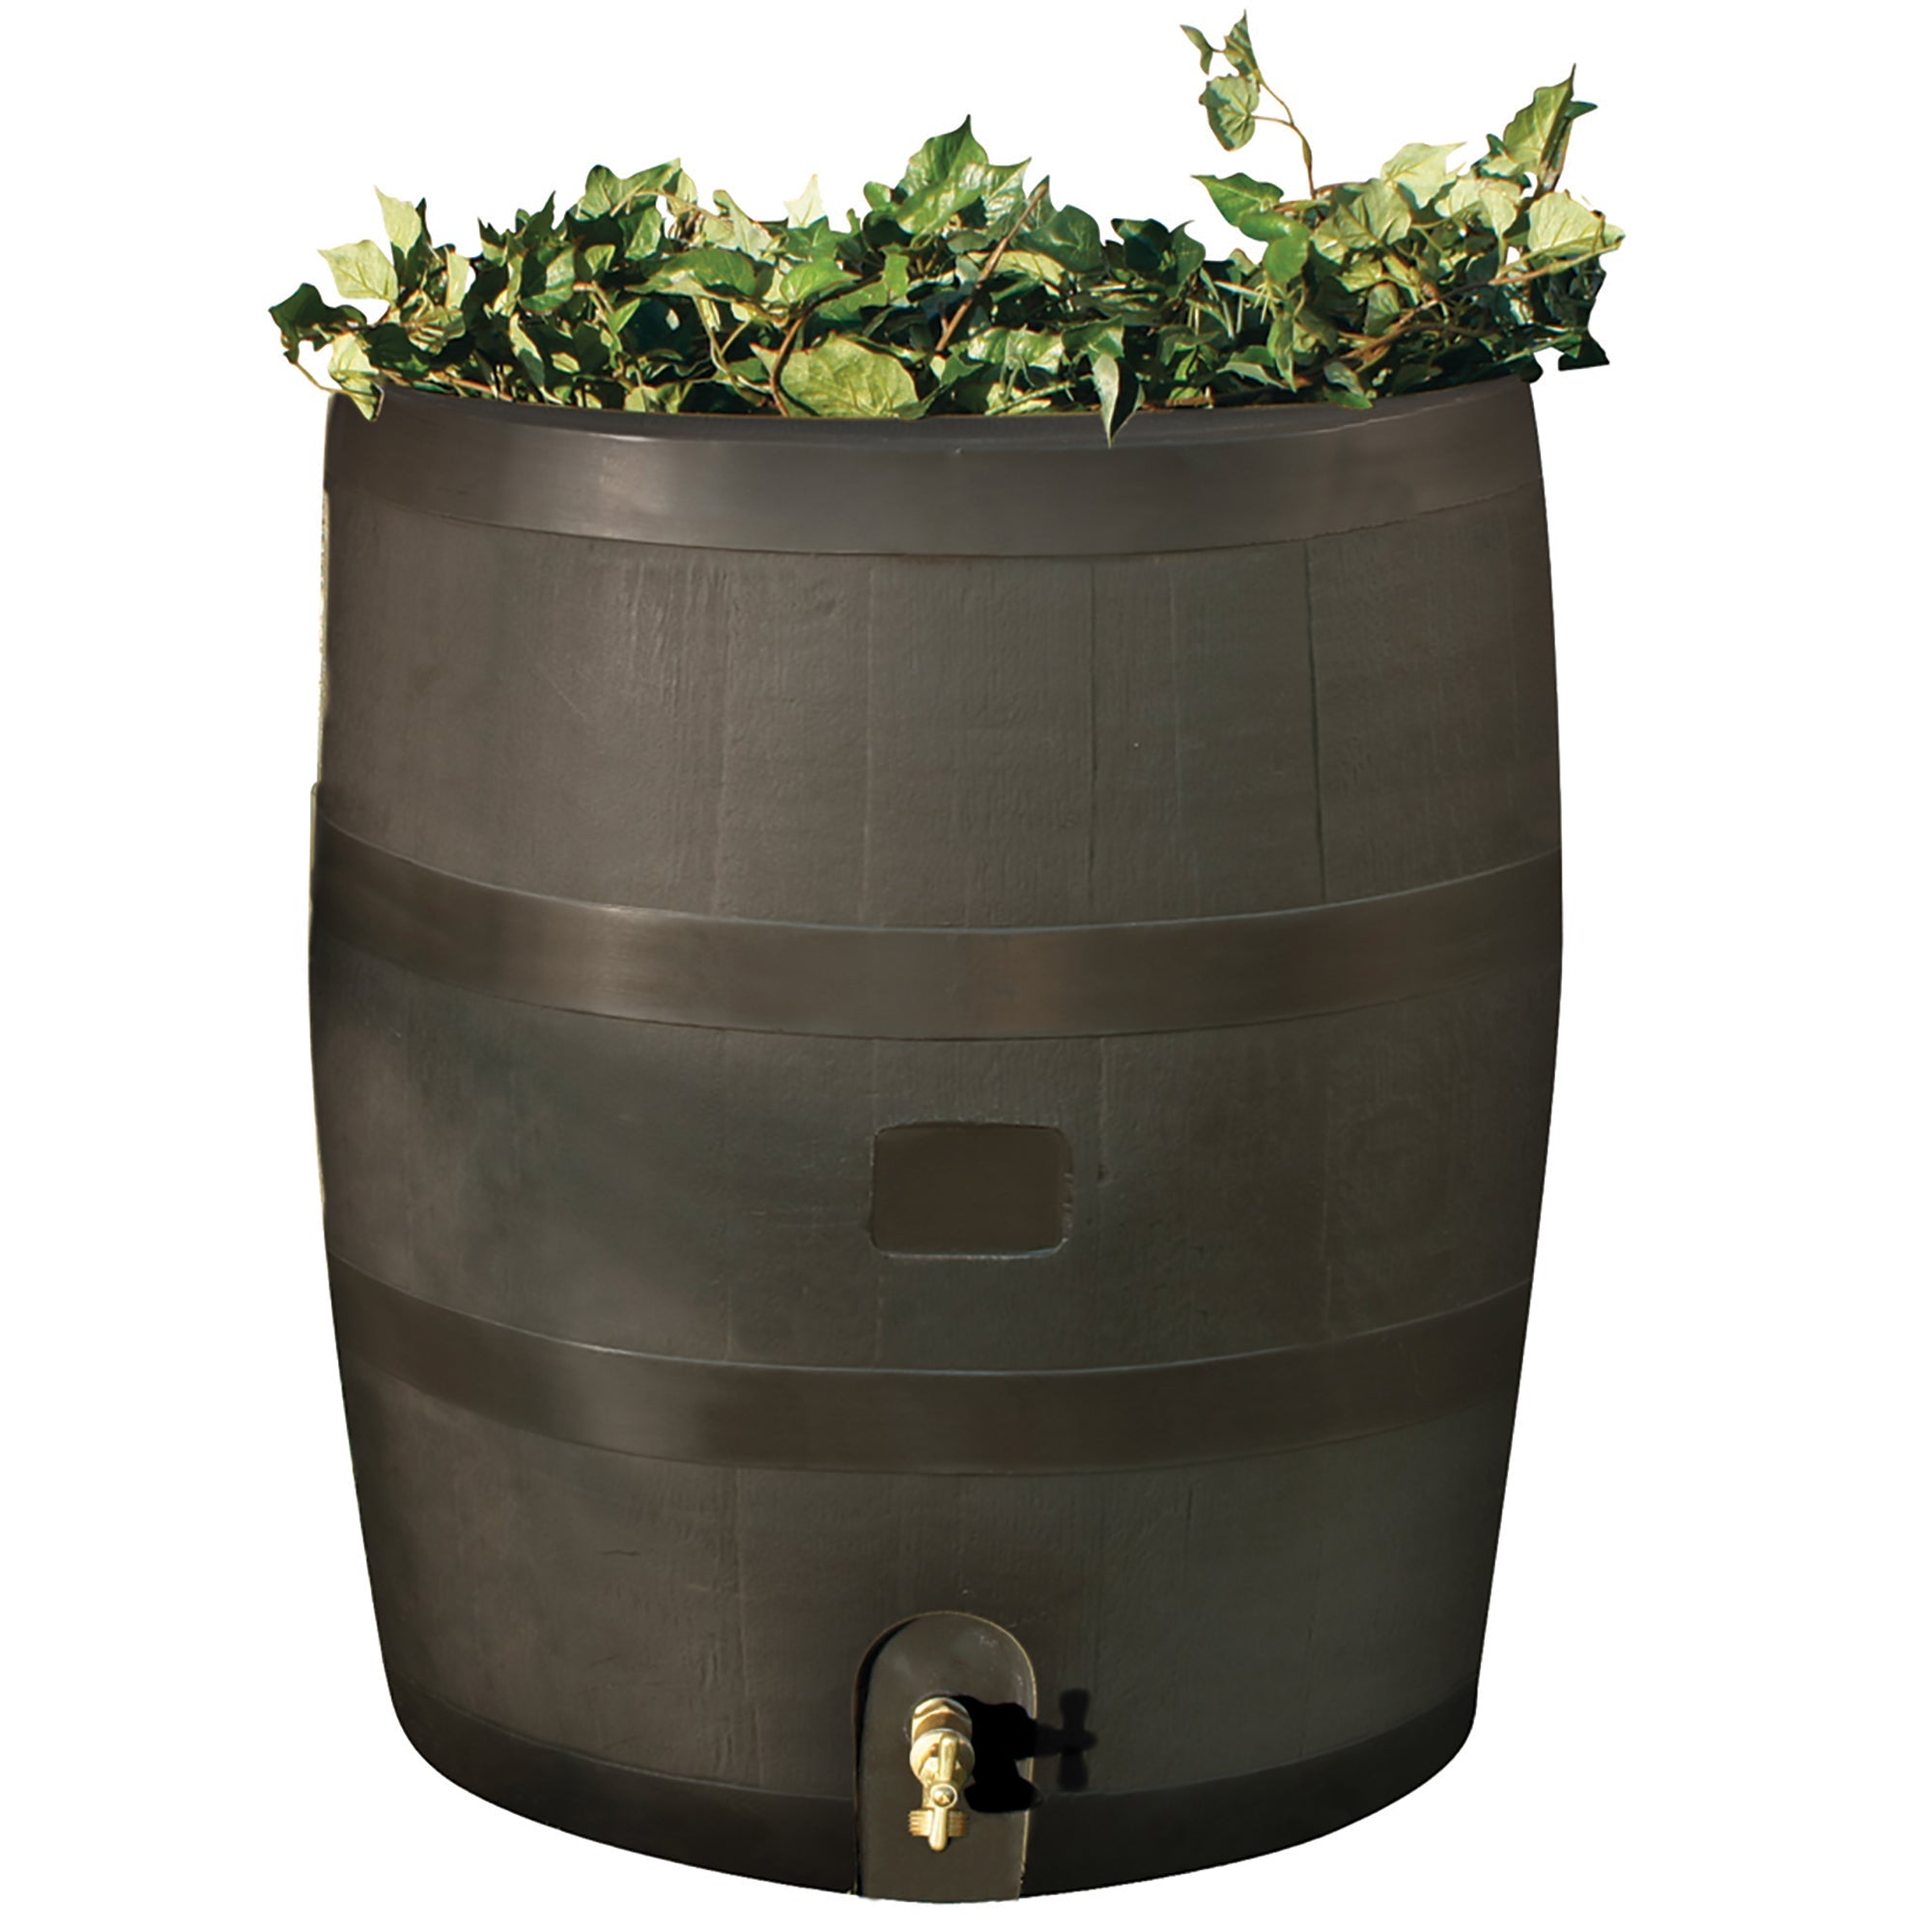 Brown round rain barrel with planter on white background